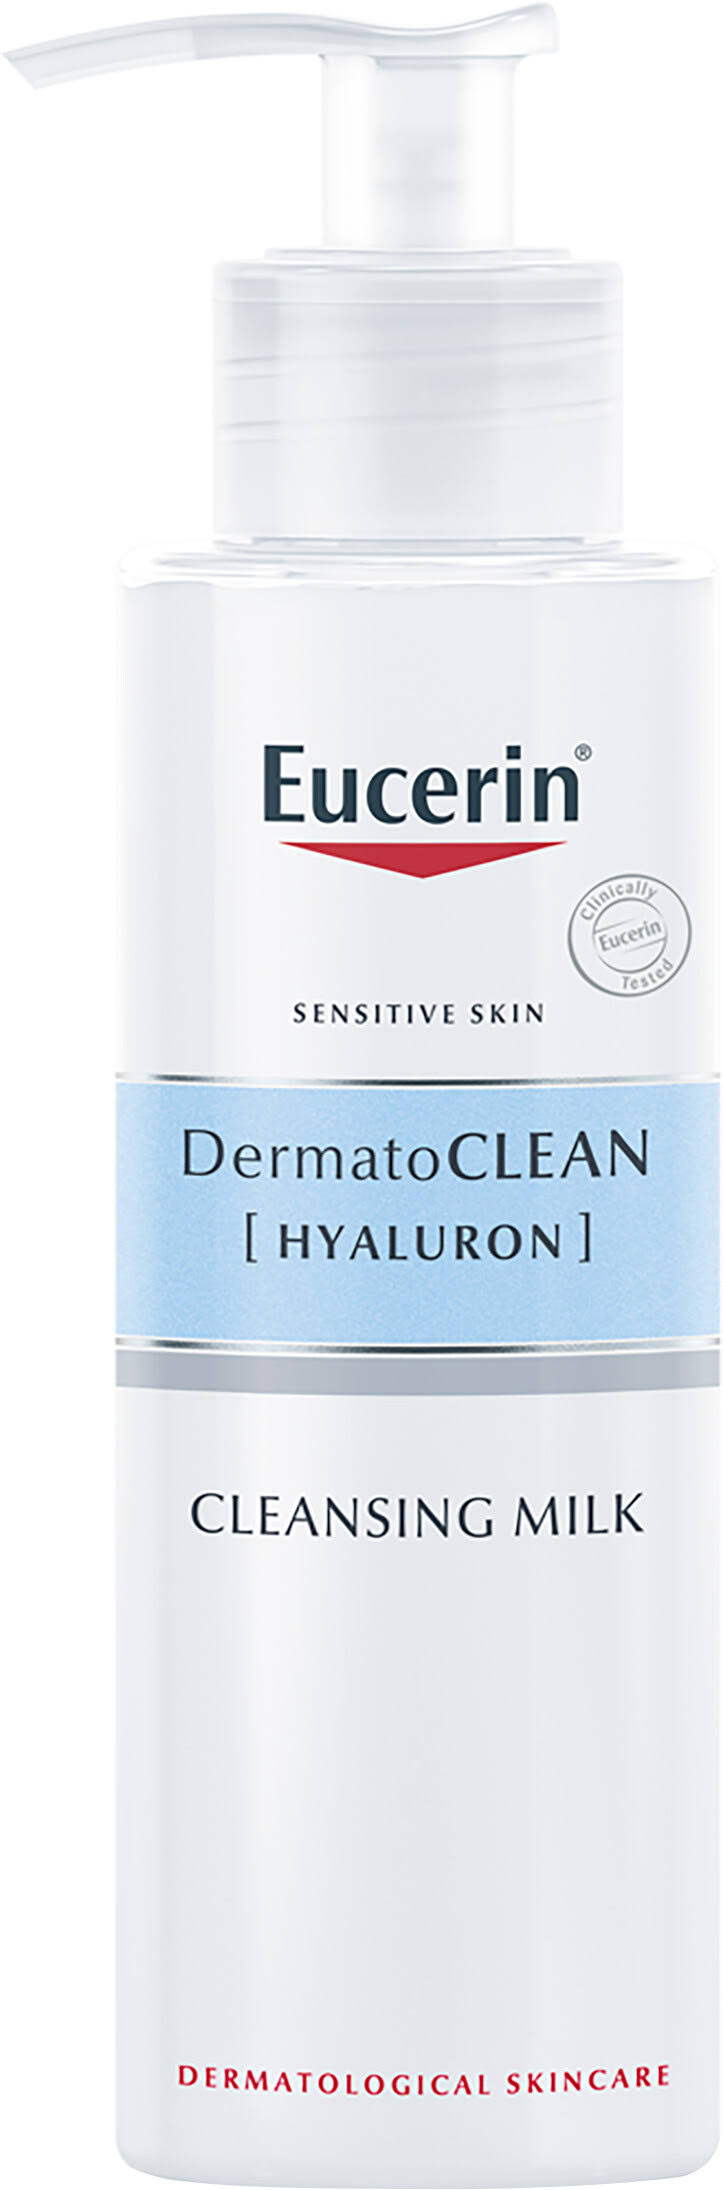 Eucerin DermatoCLEAN Hyaluron Cleansing Milk (200ml)